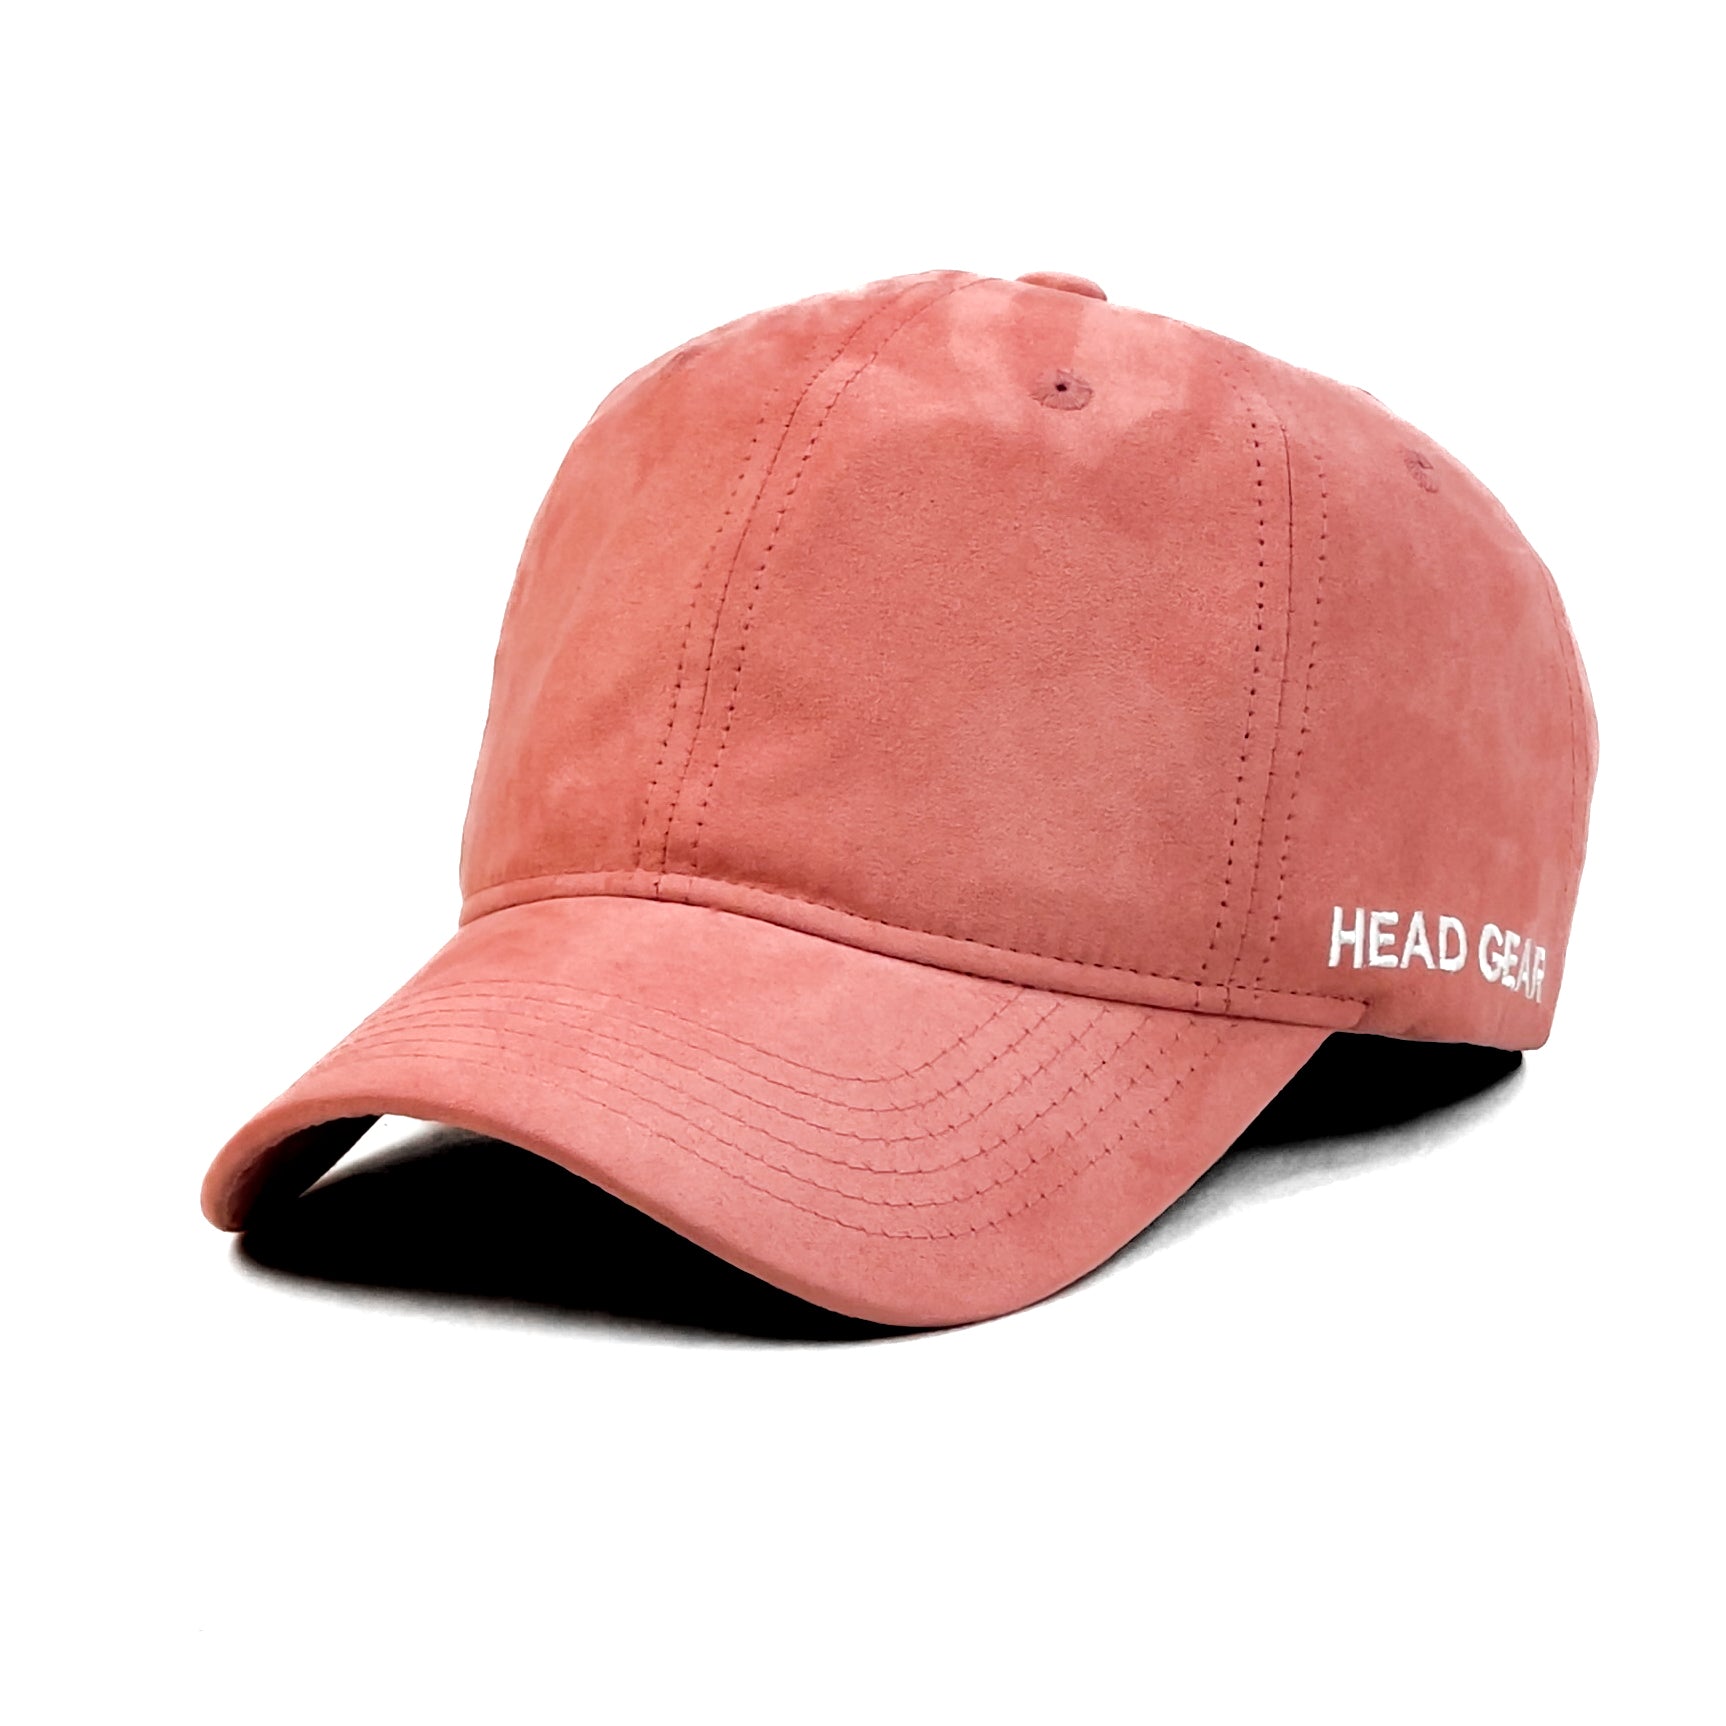 HEAD GEAR LIGHT PINK SUEDE CAP